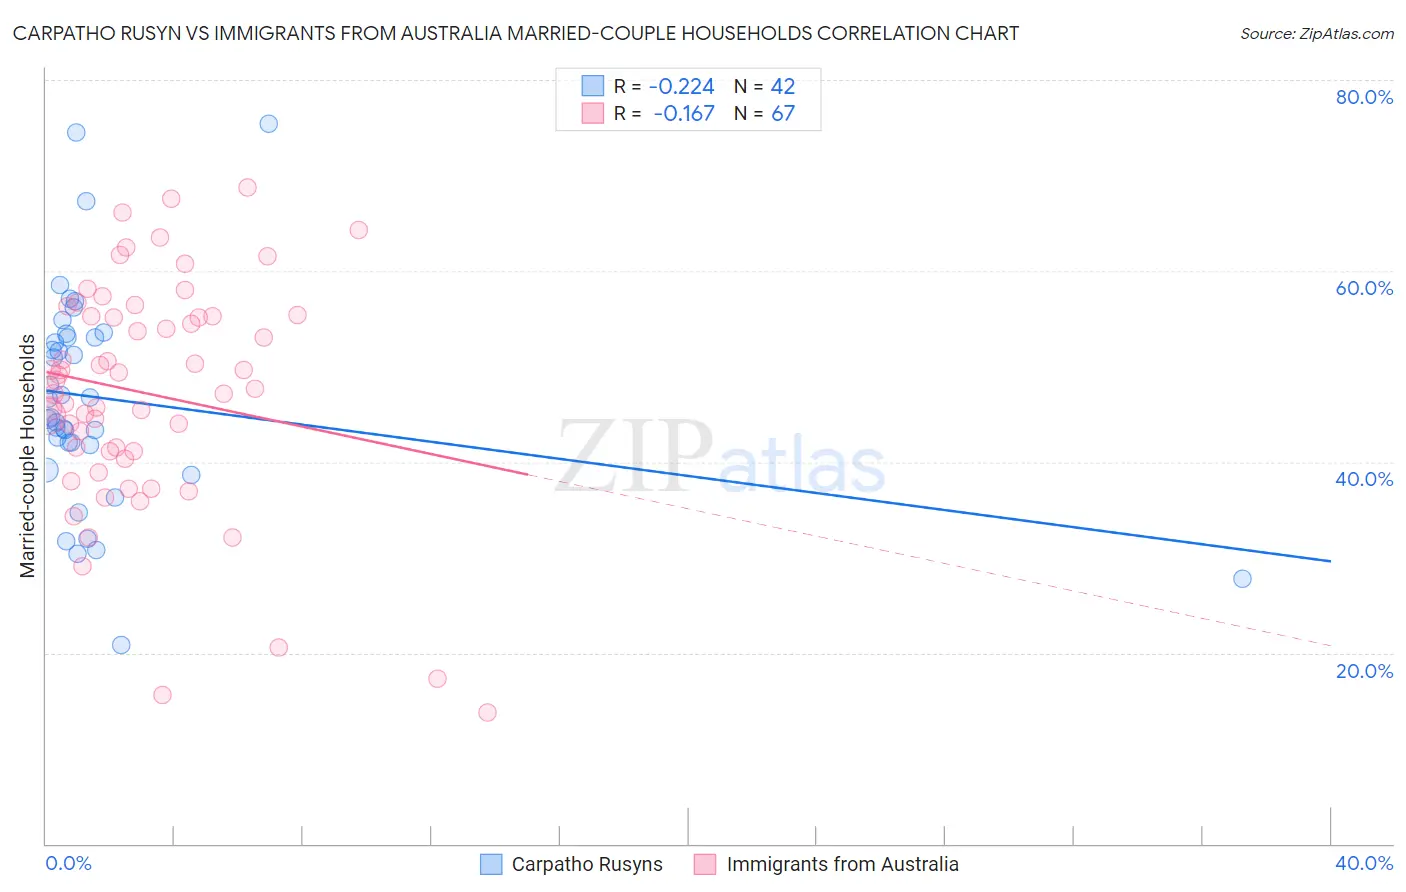 Carpatho Rusyn vs Immigrants from Australia Married-couple Households